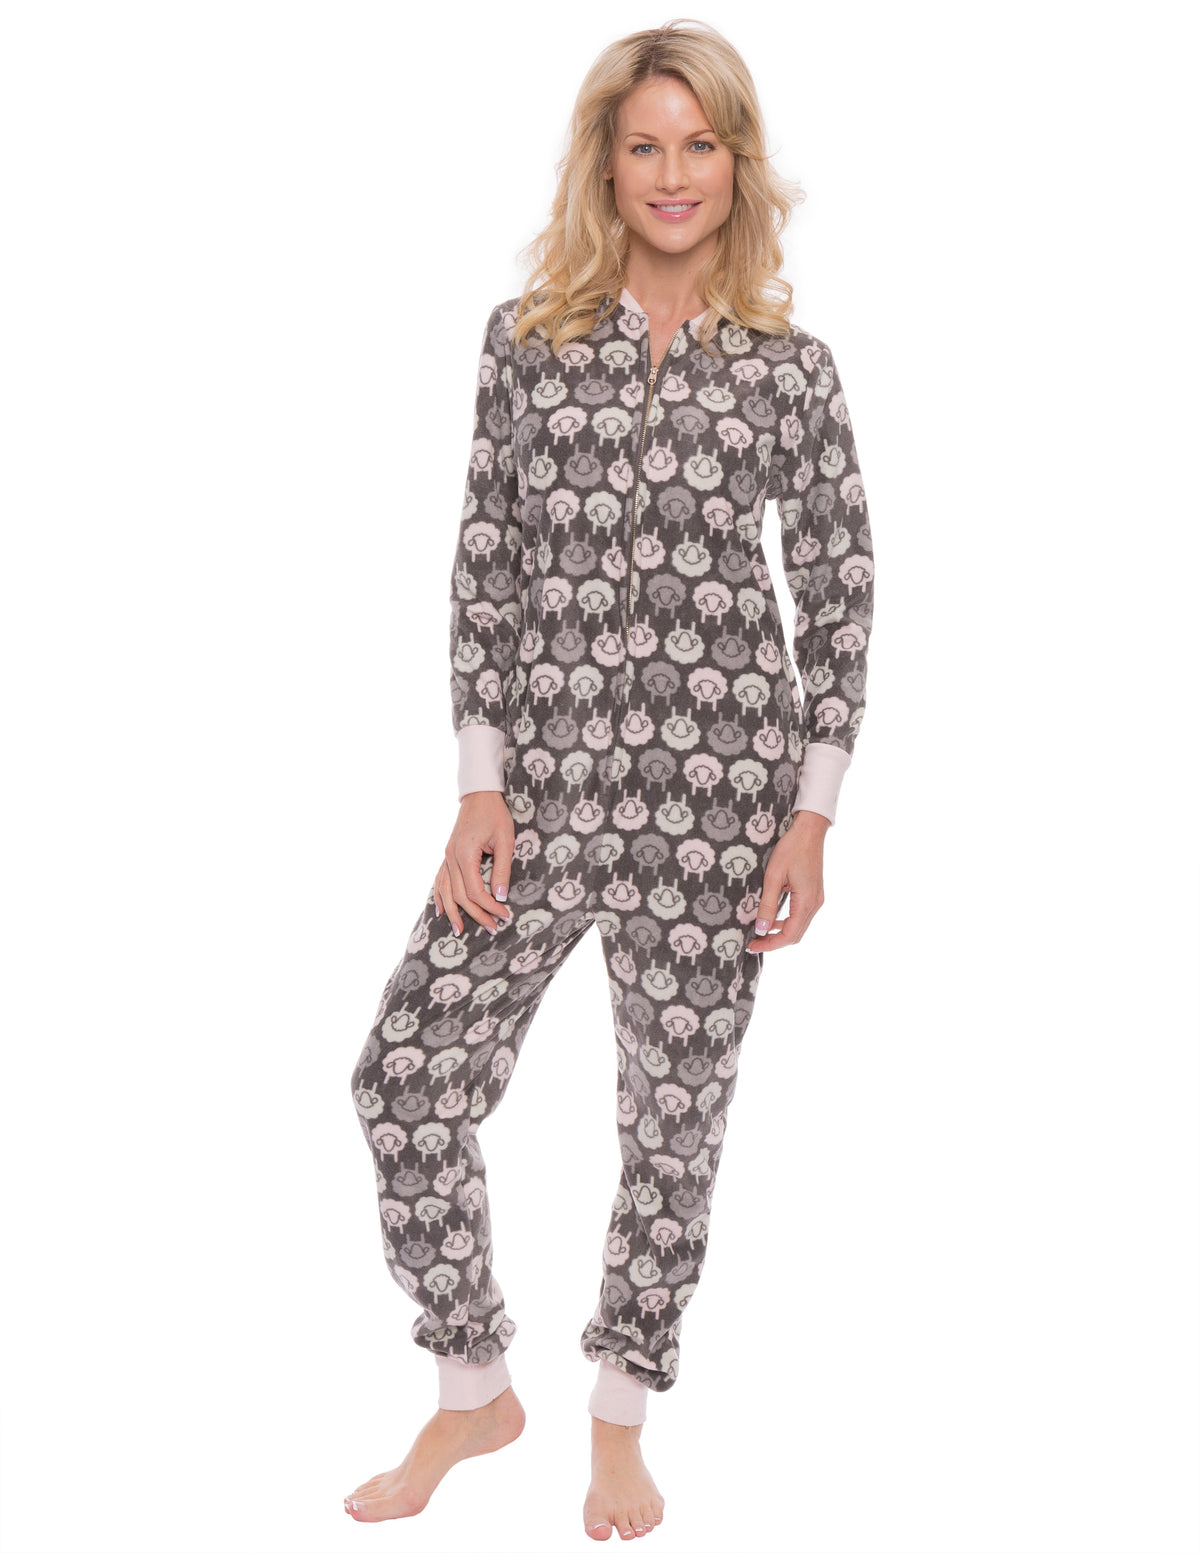 Women's Premium Microfleece Onesie Jumper Pajama - Sheep Charcoal